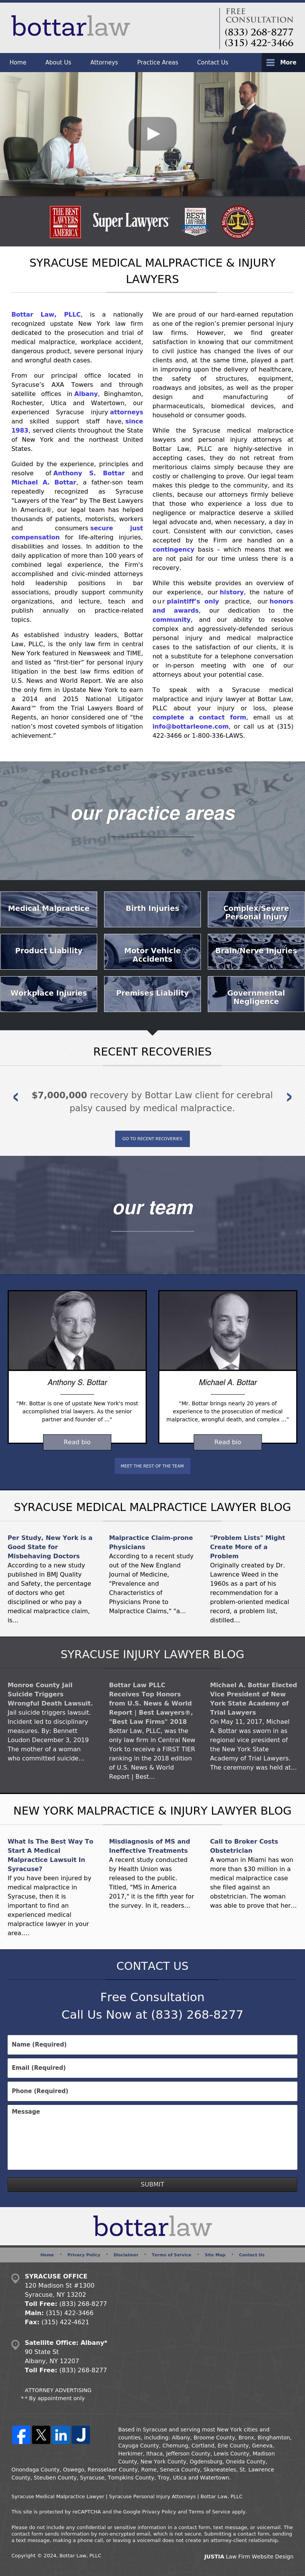 Bottar Leone PLLC - Binghamton NY Lawyers